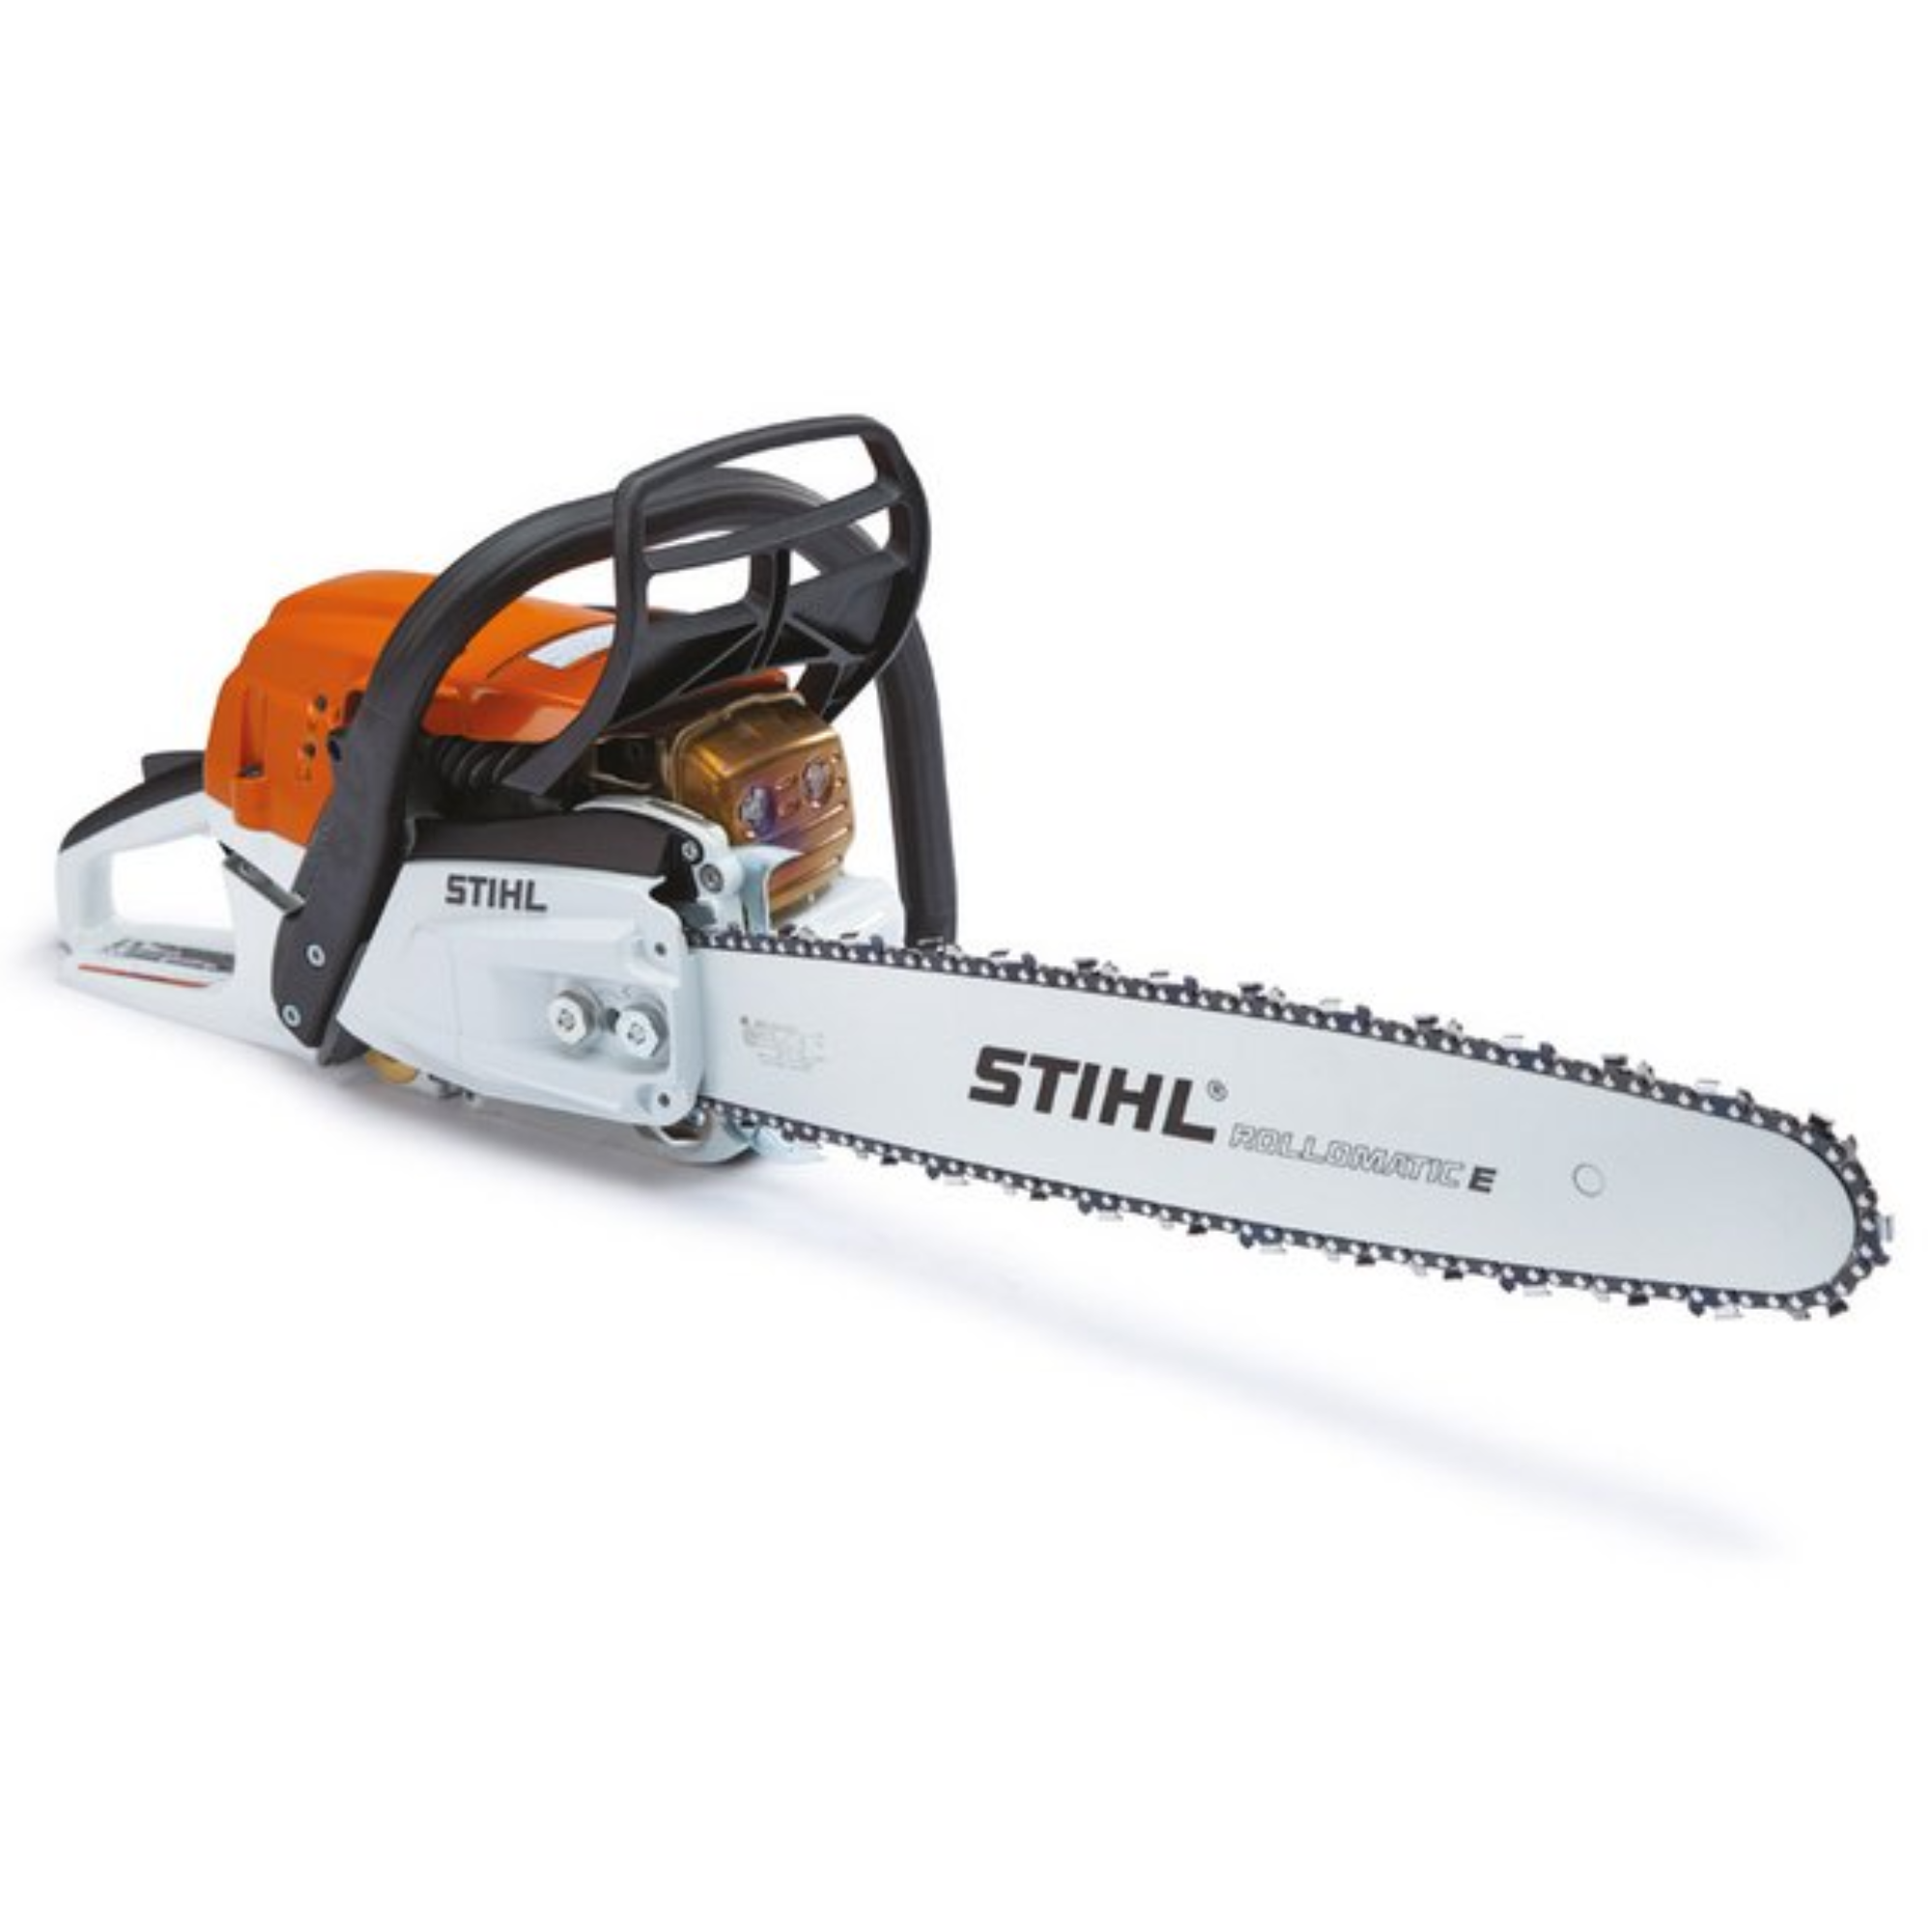 STIHL MS 180 Chainsaw at Rs 16356.00, Stihl Chainsaw